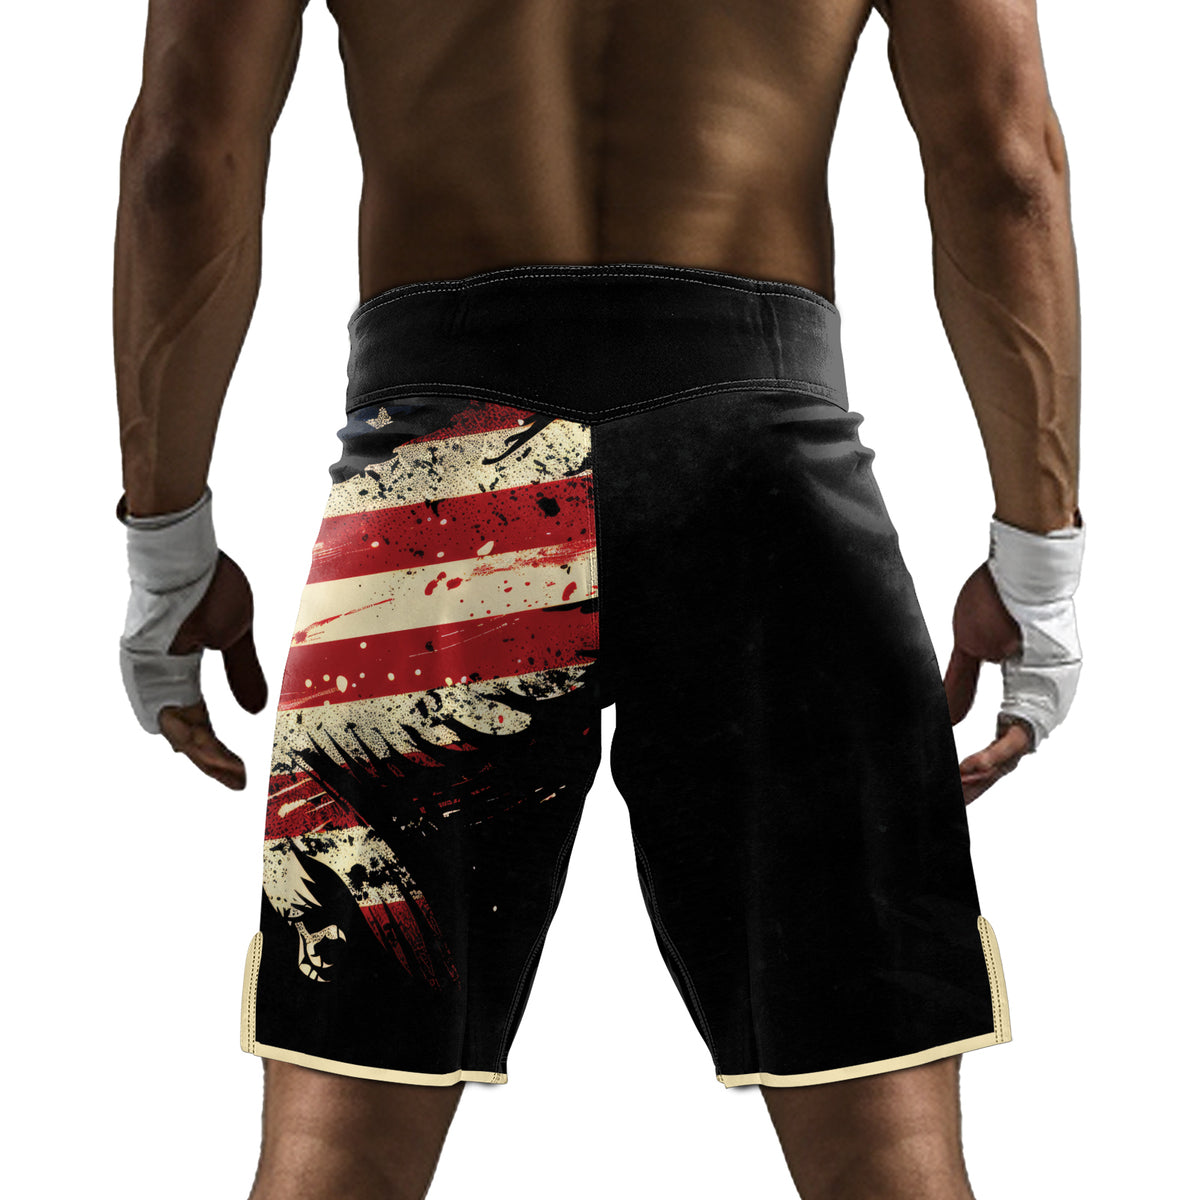 Rashninja Eagle American Flag Men's Fight Shorts